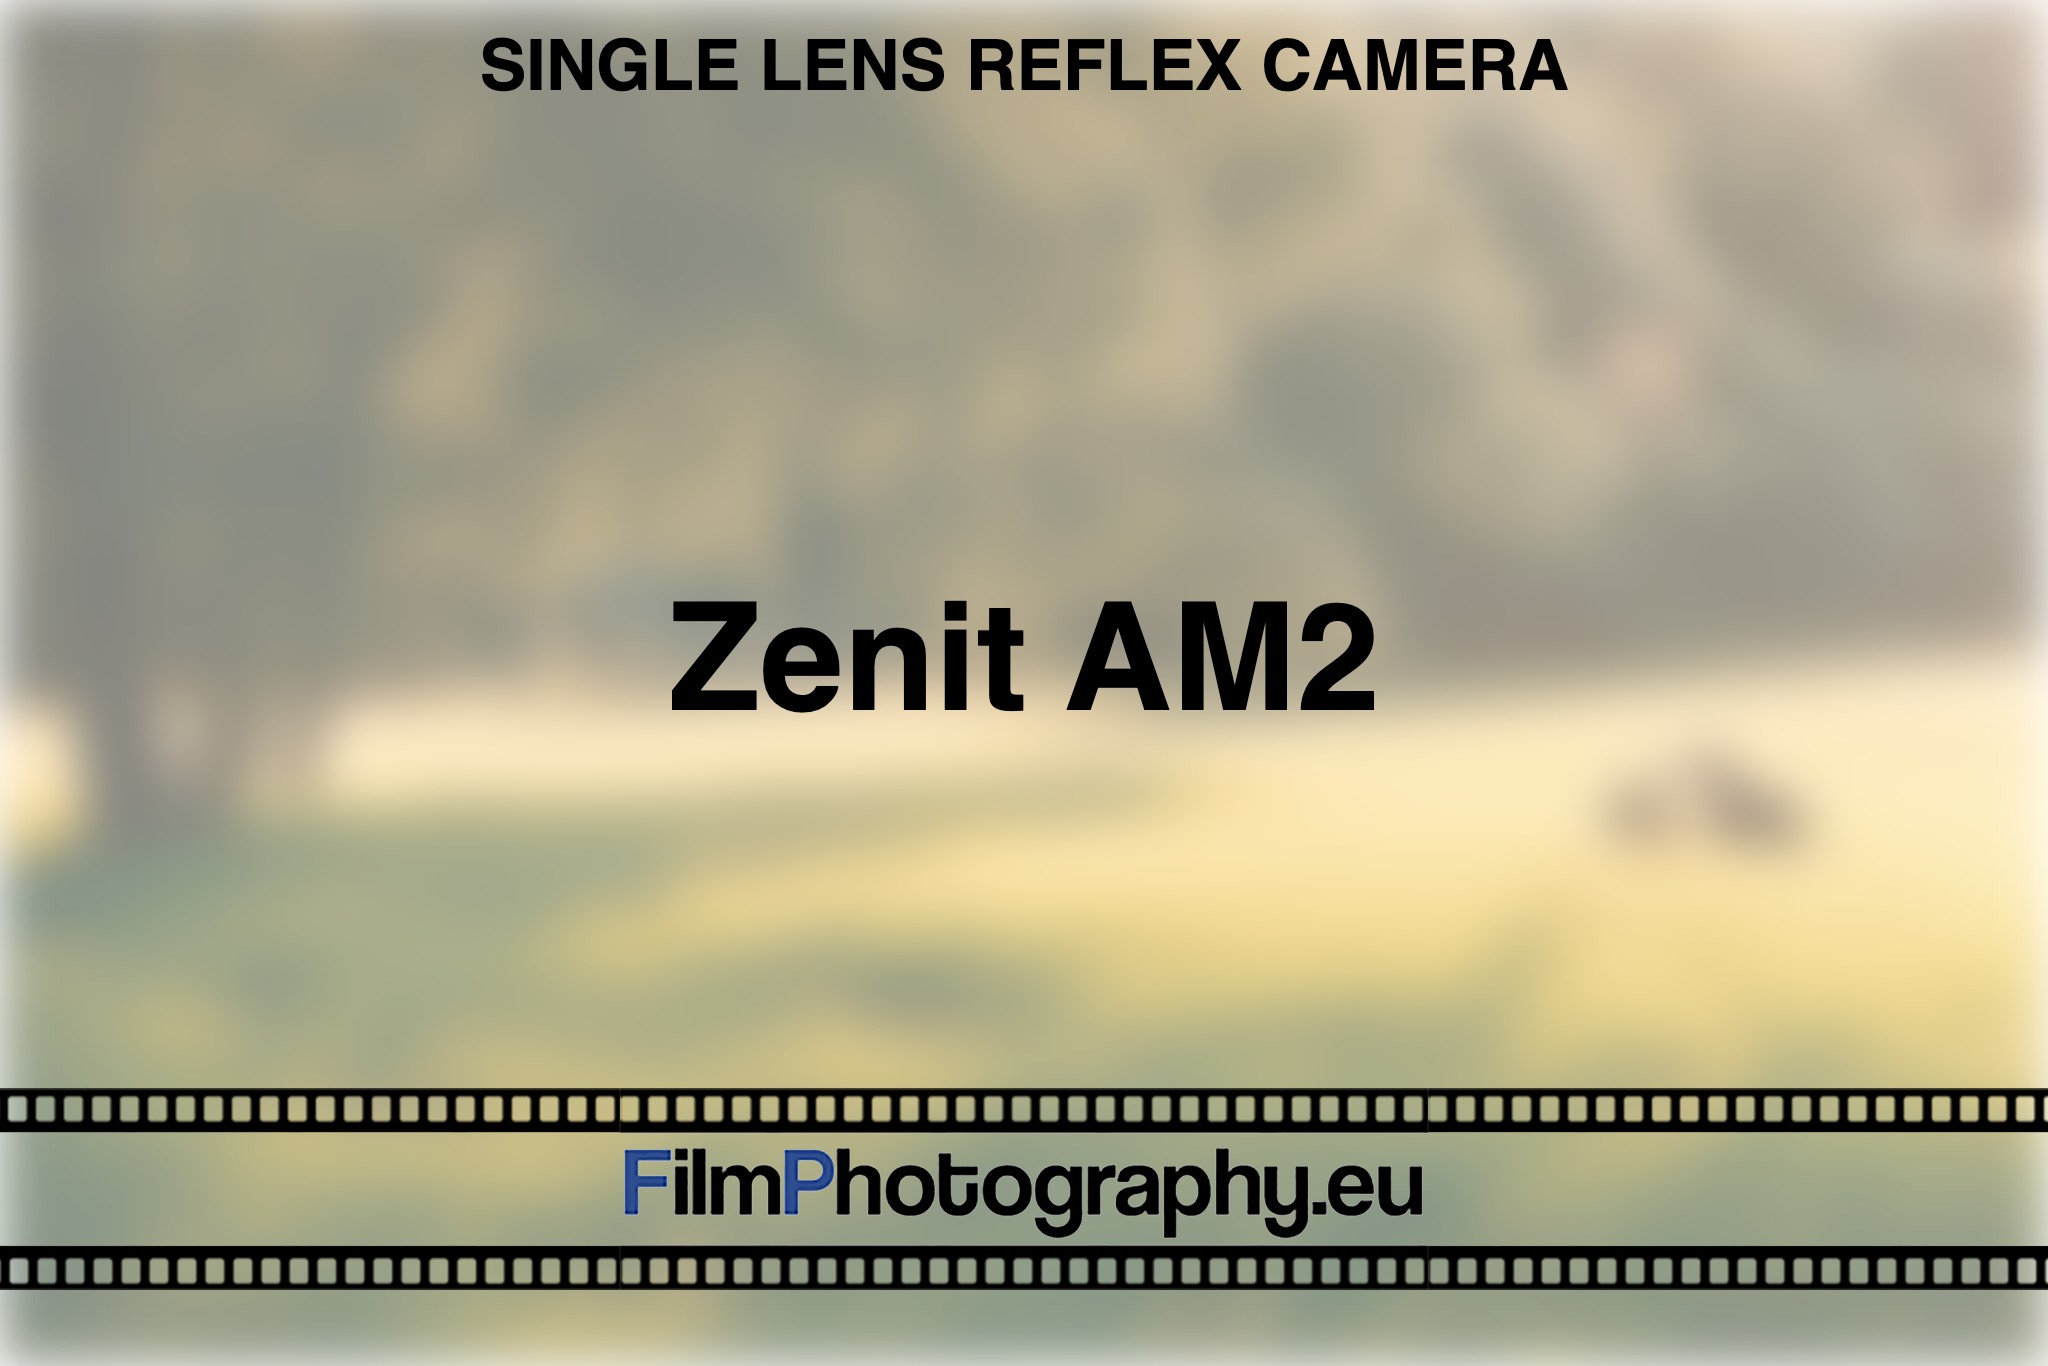 zenit-am2-single-lens-reflex-camera-bnv